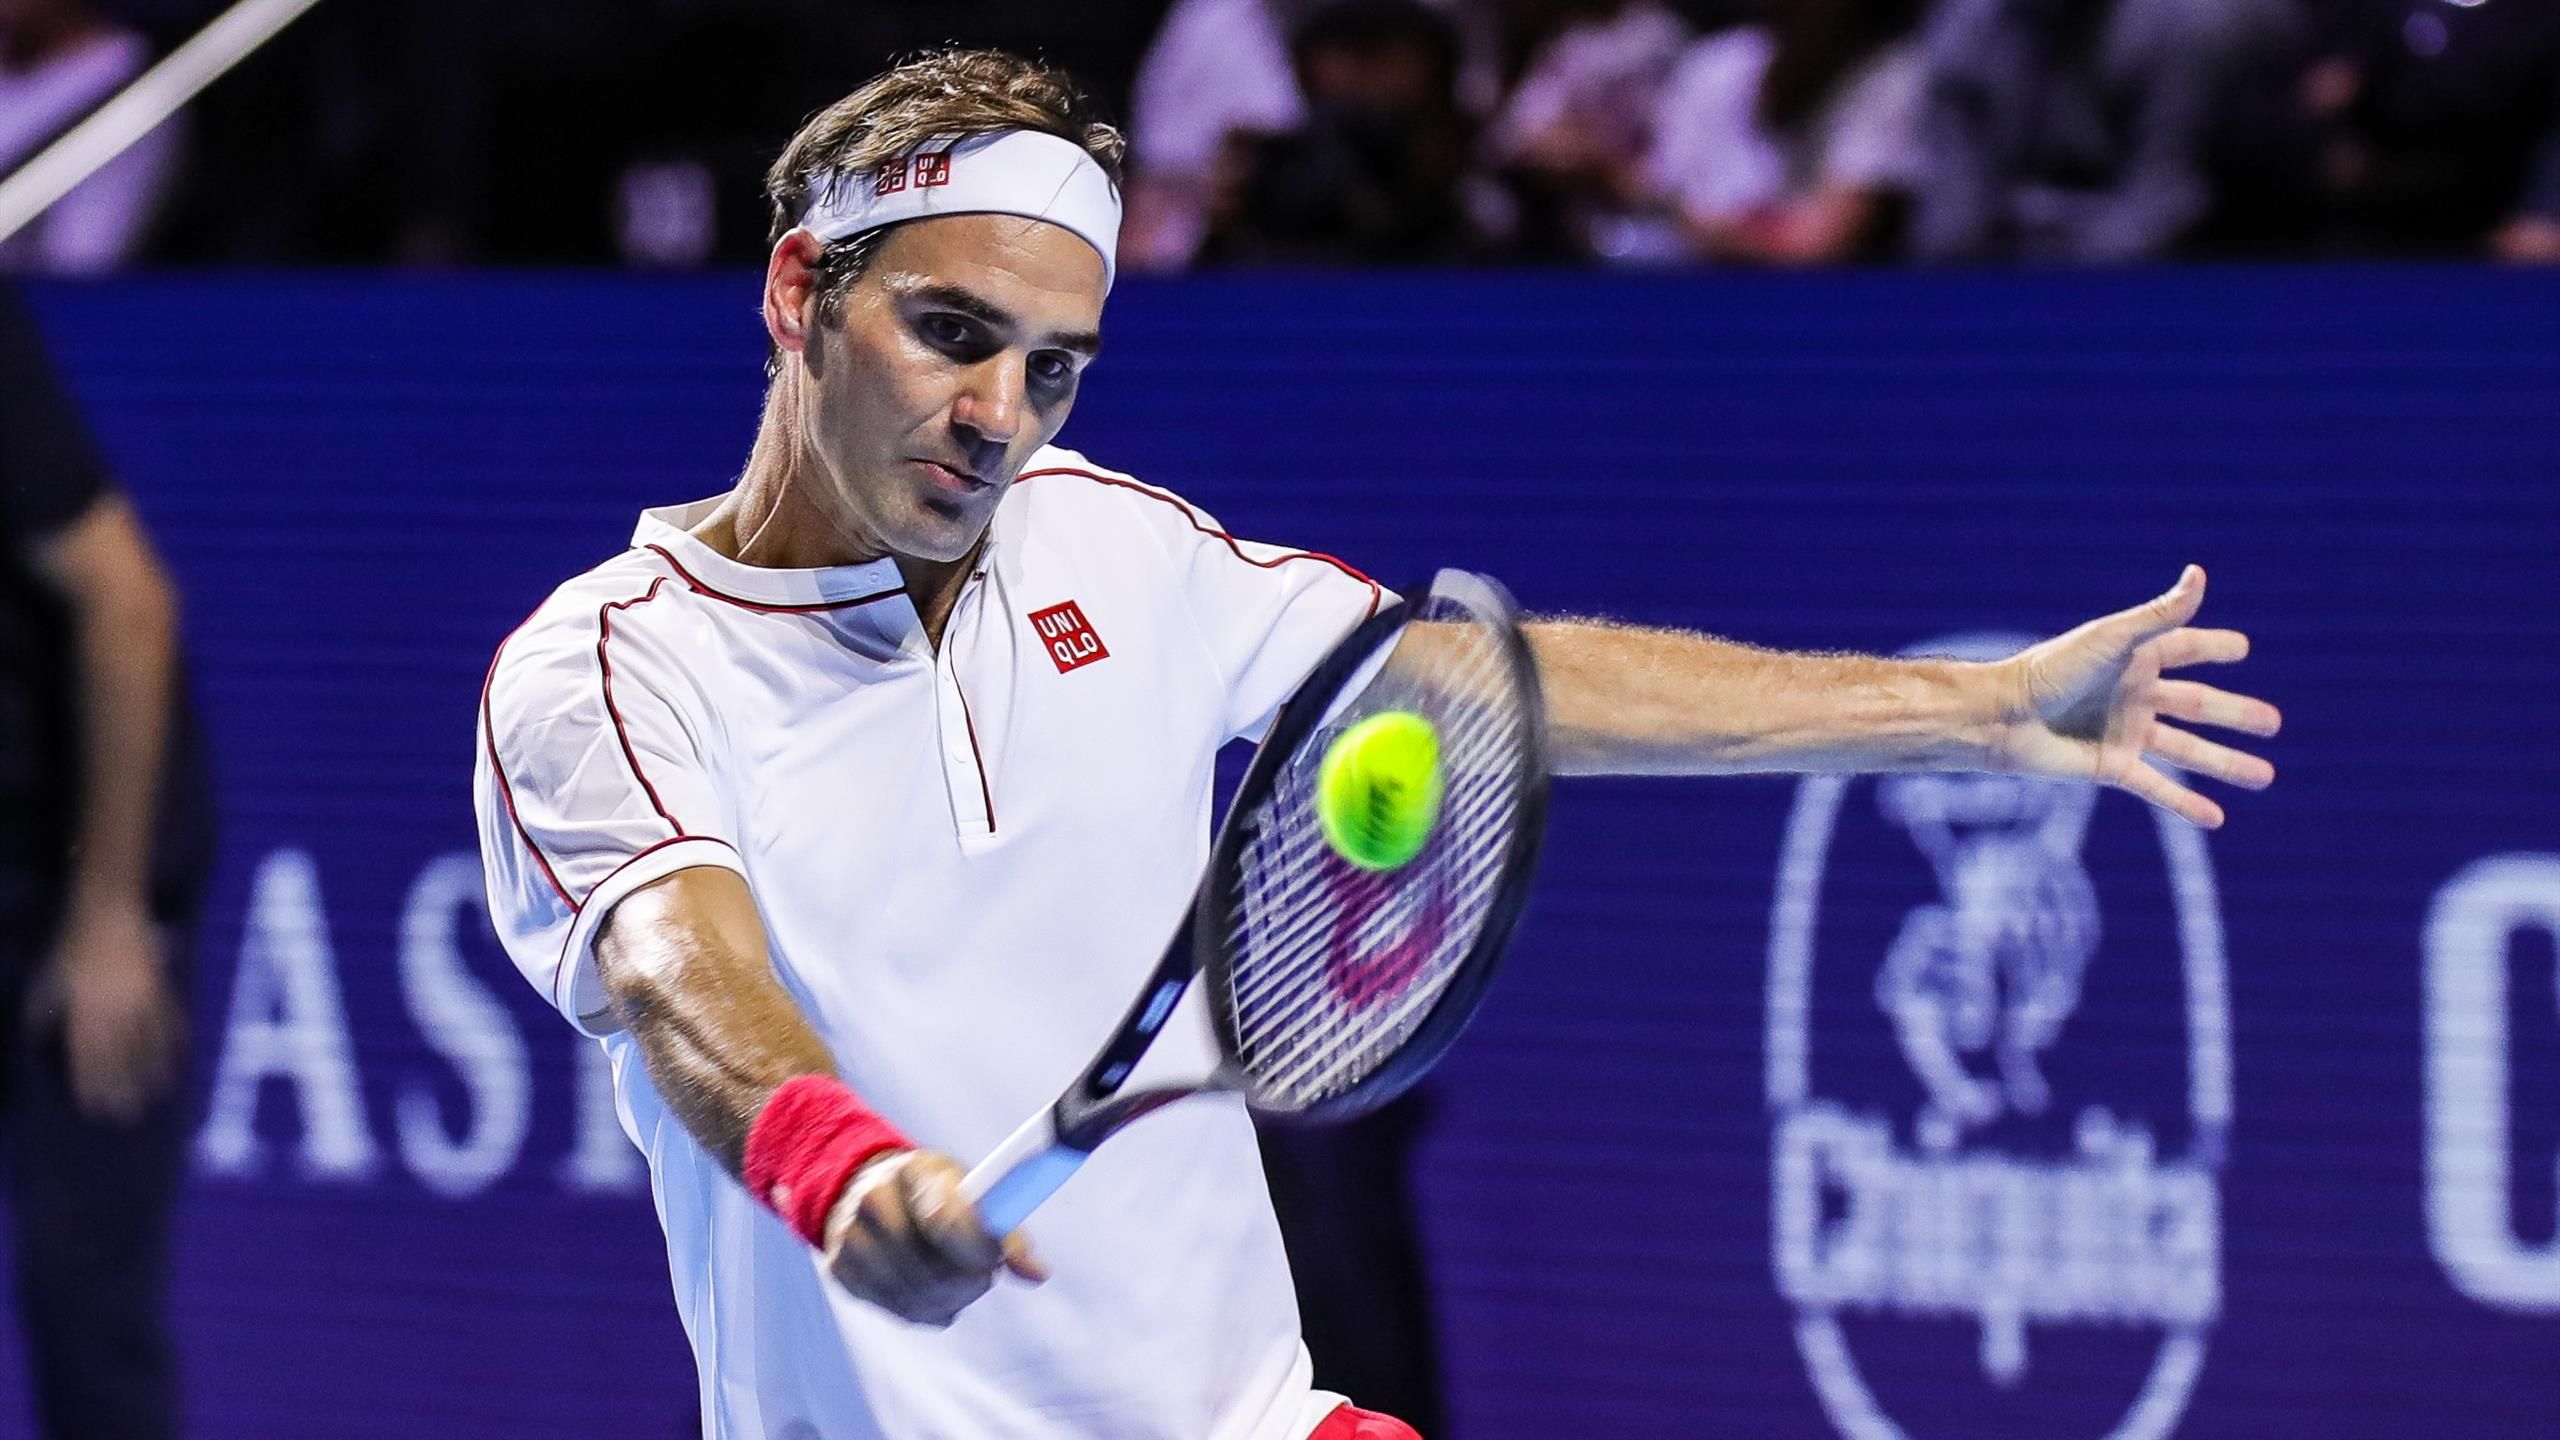 Tennis news - Roger Federer obliterates Radu Albot to reach Basel quarter-finals